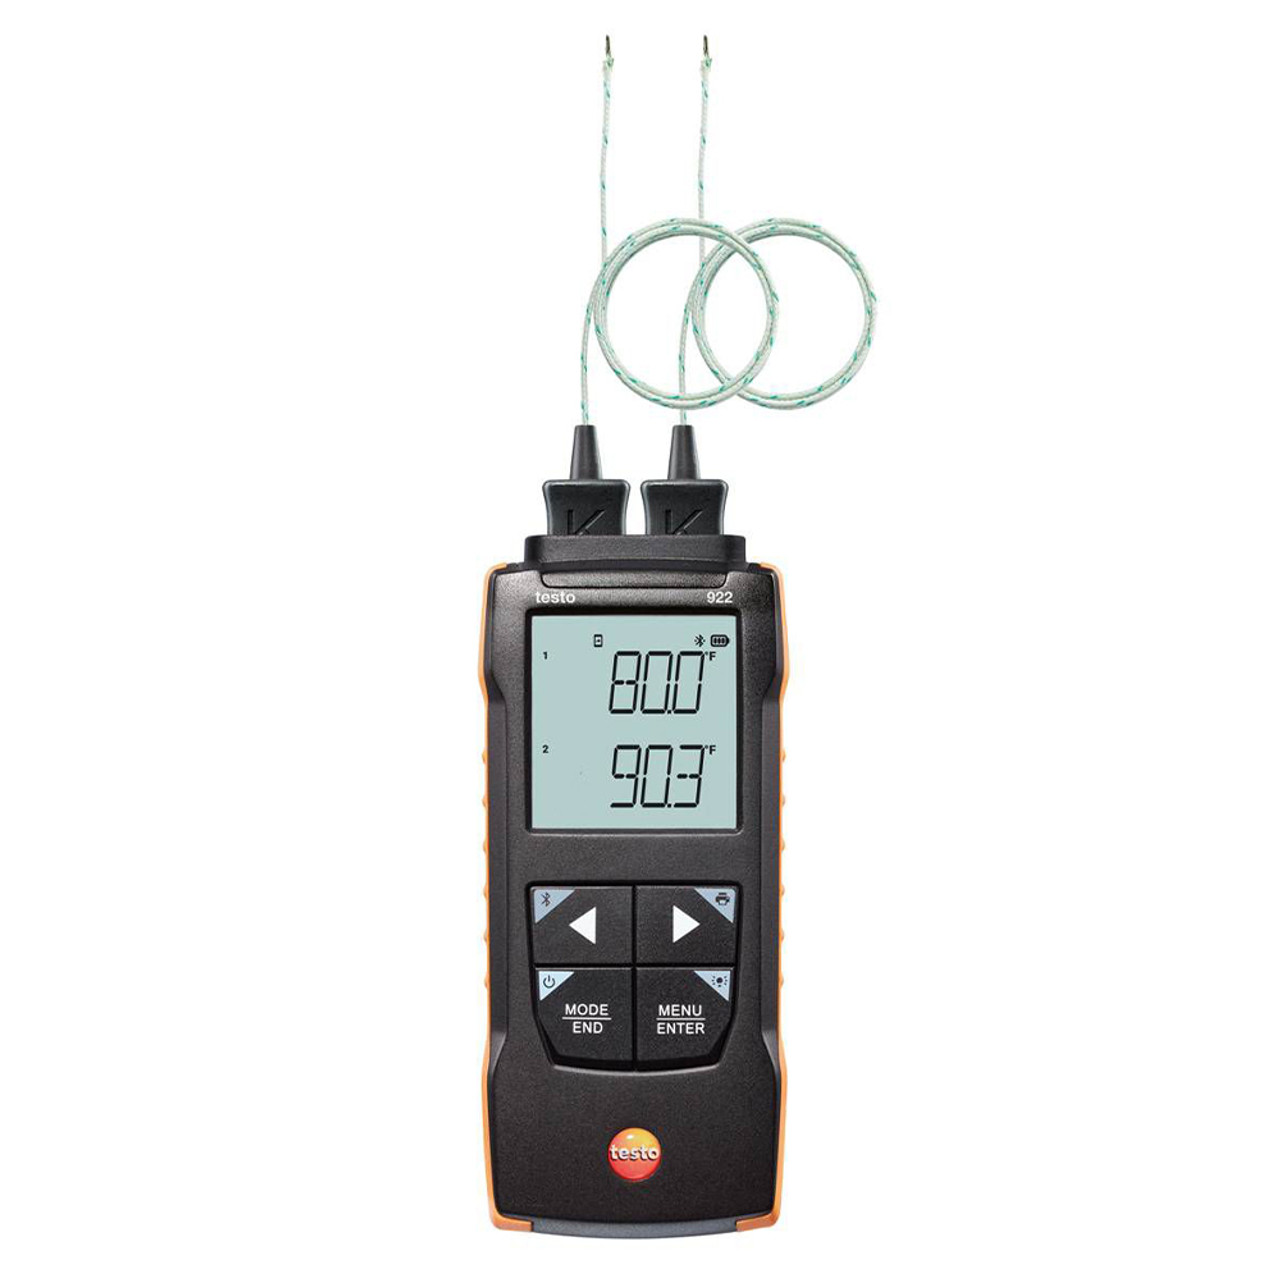 testo 922 - Digital temperature meter